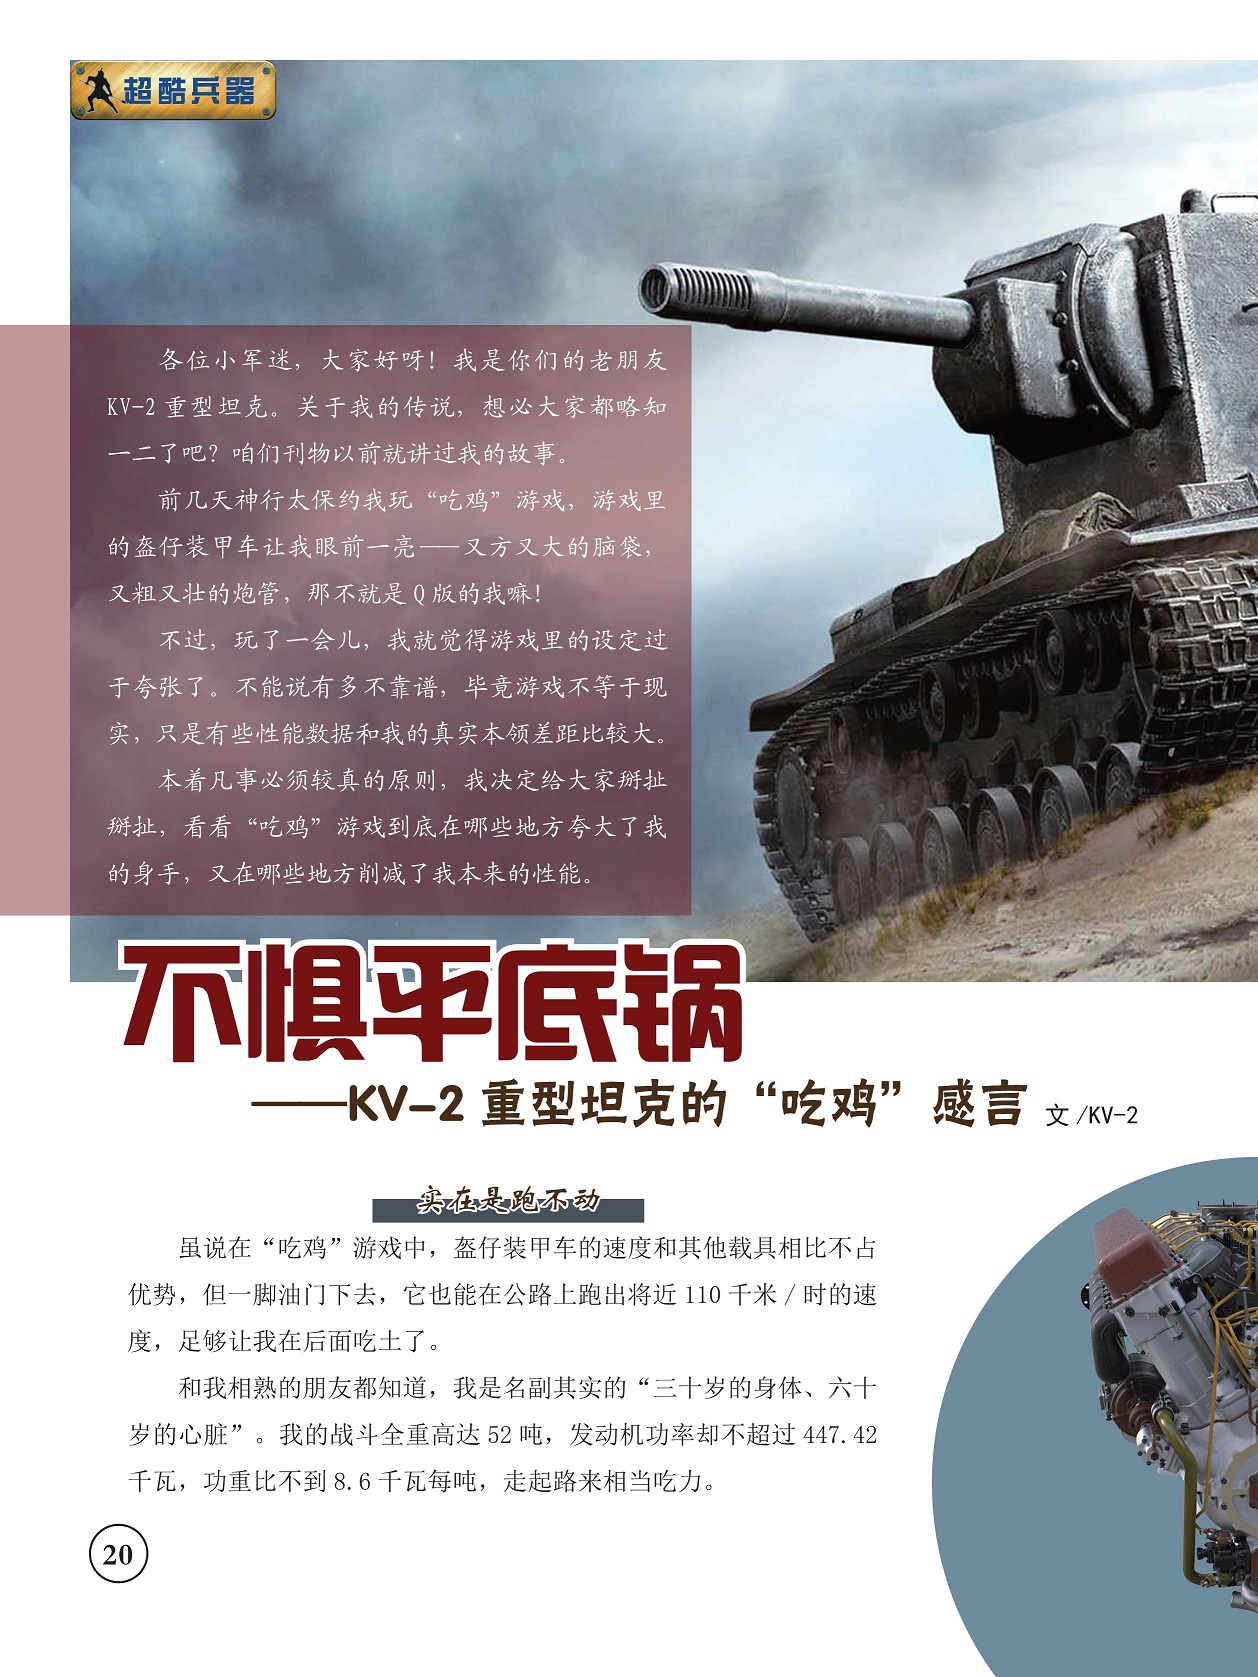 KV-2重型坦克的“吃鸡”感言,盔仔装甲车的速度和其他载具相比不占优势